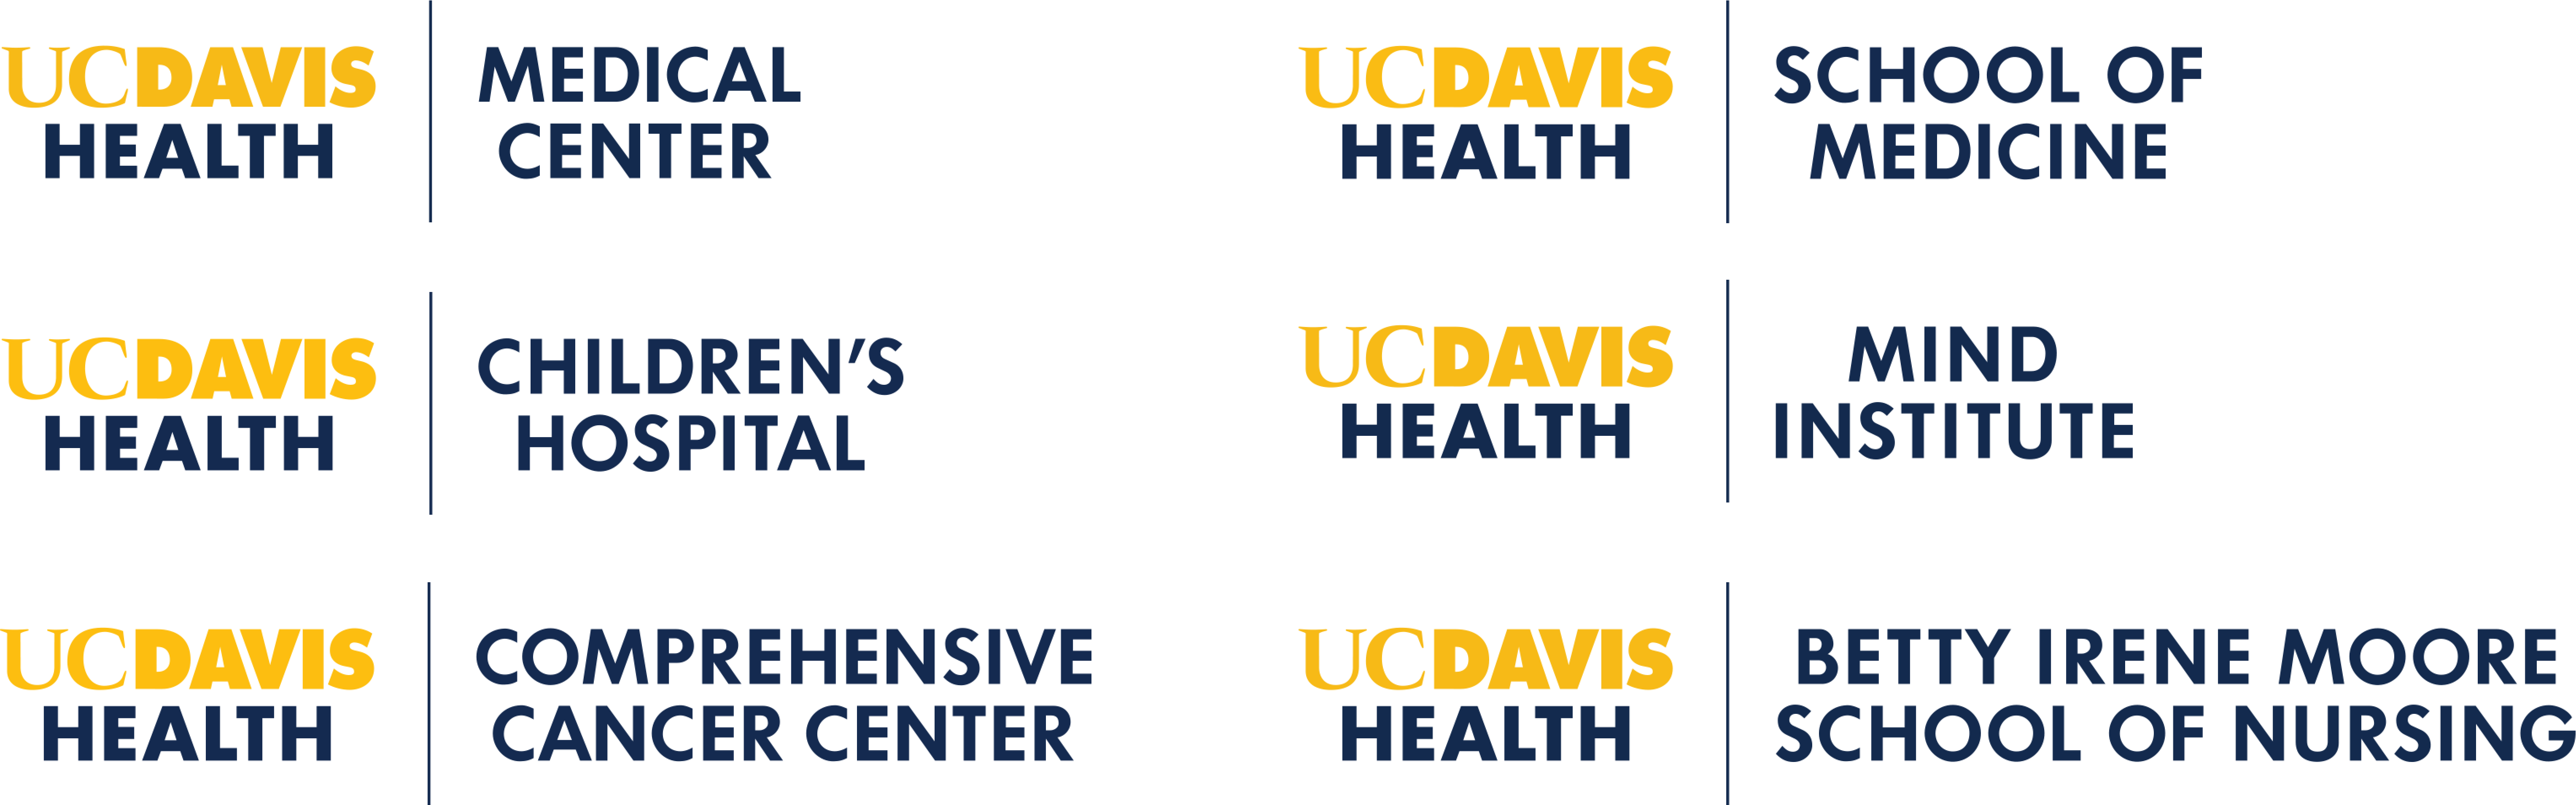 Display of UC Davis Health sub-brand logos